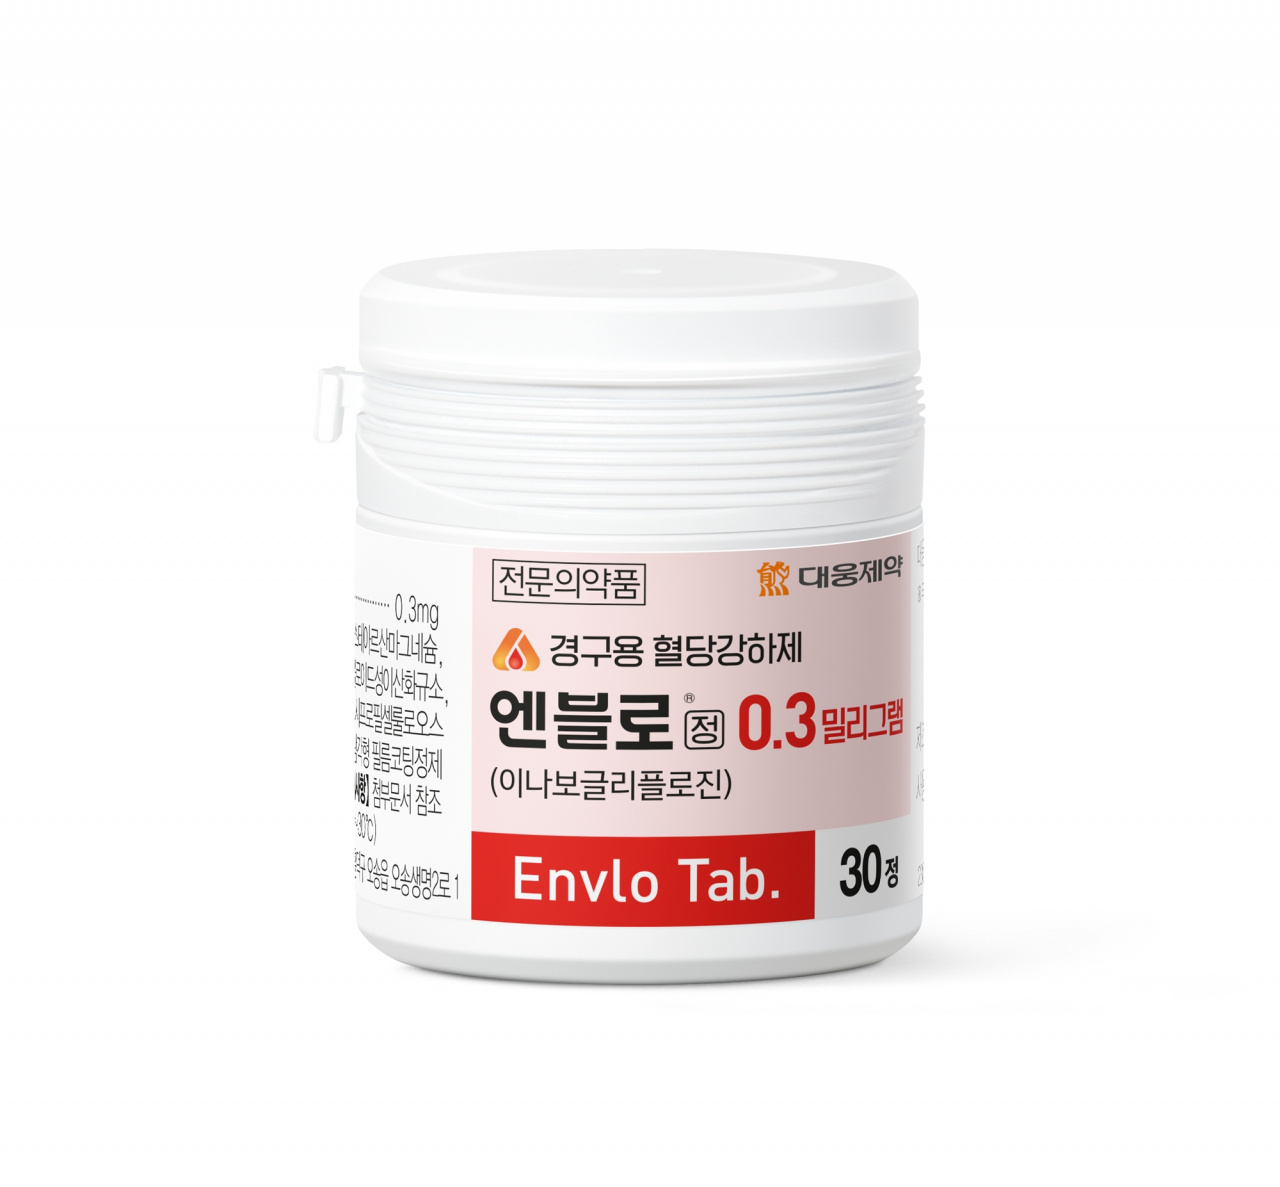 Daewoong Pharmaceutical's diabetes medicine Envlo (Daewoong Pharmaceutical)